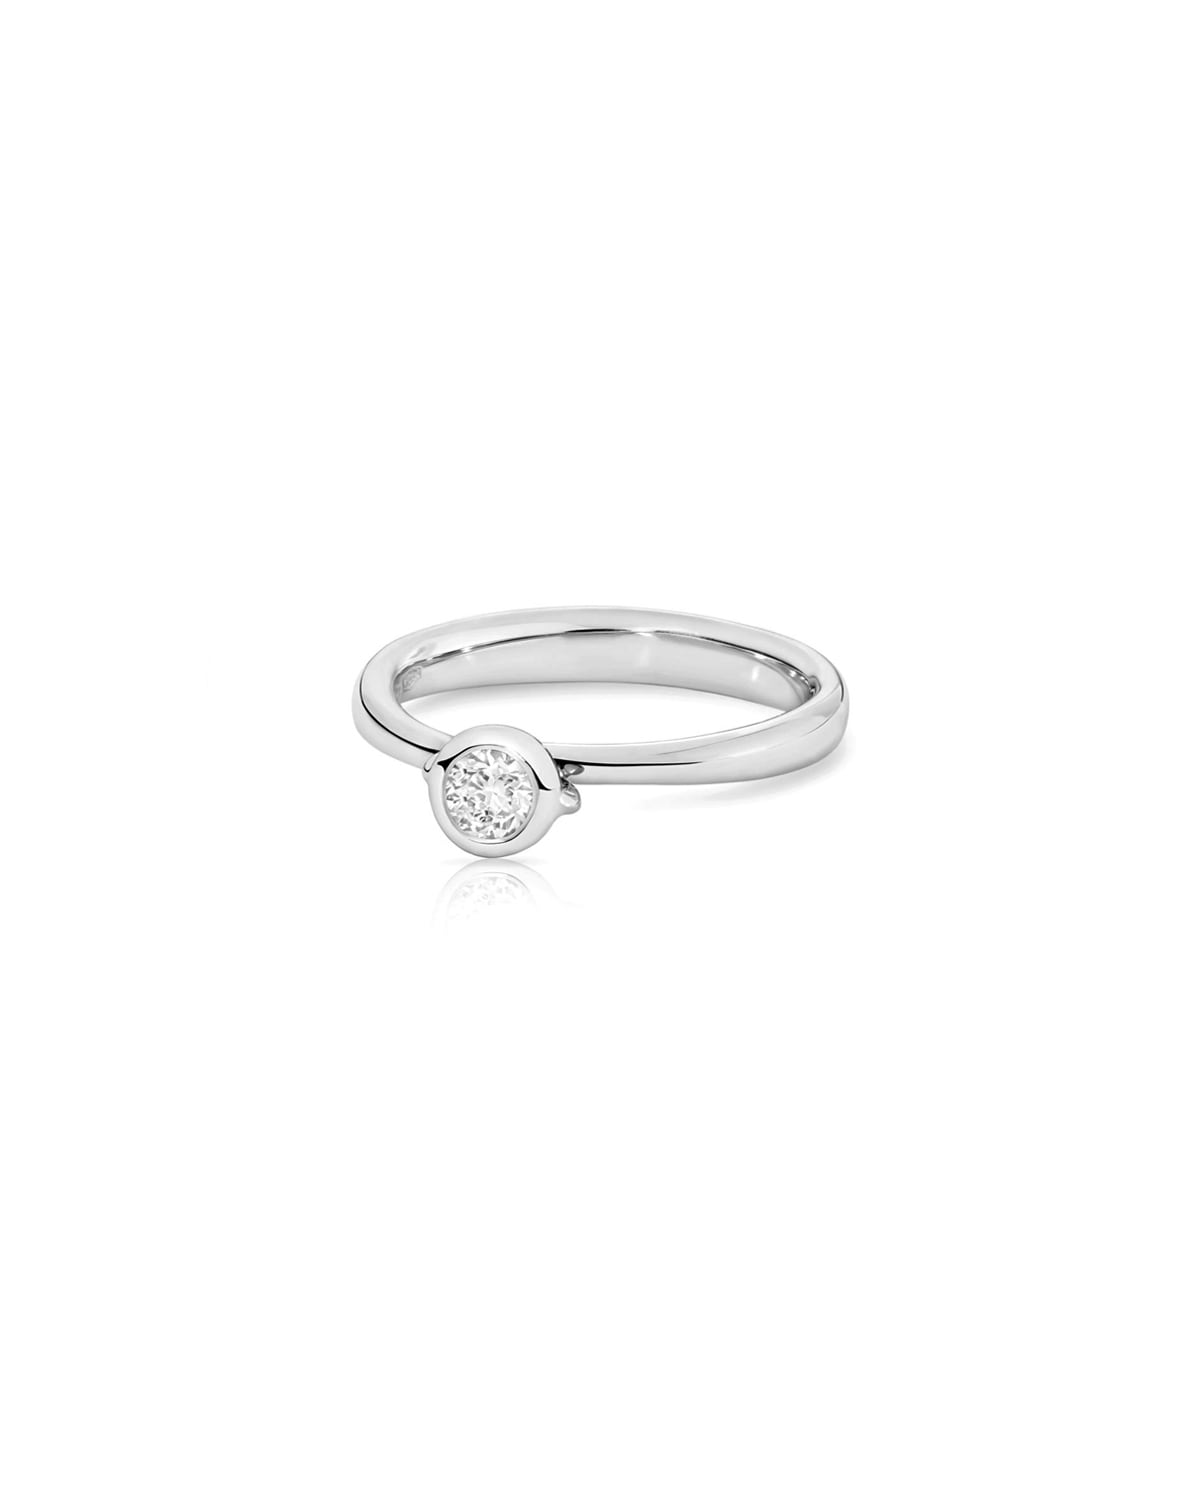 Bouton White Gold Diamond Solitaire Bezel Ring, Size 6.5